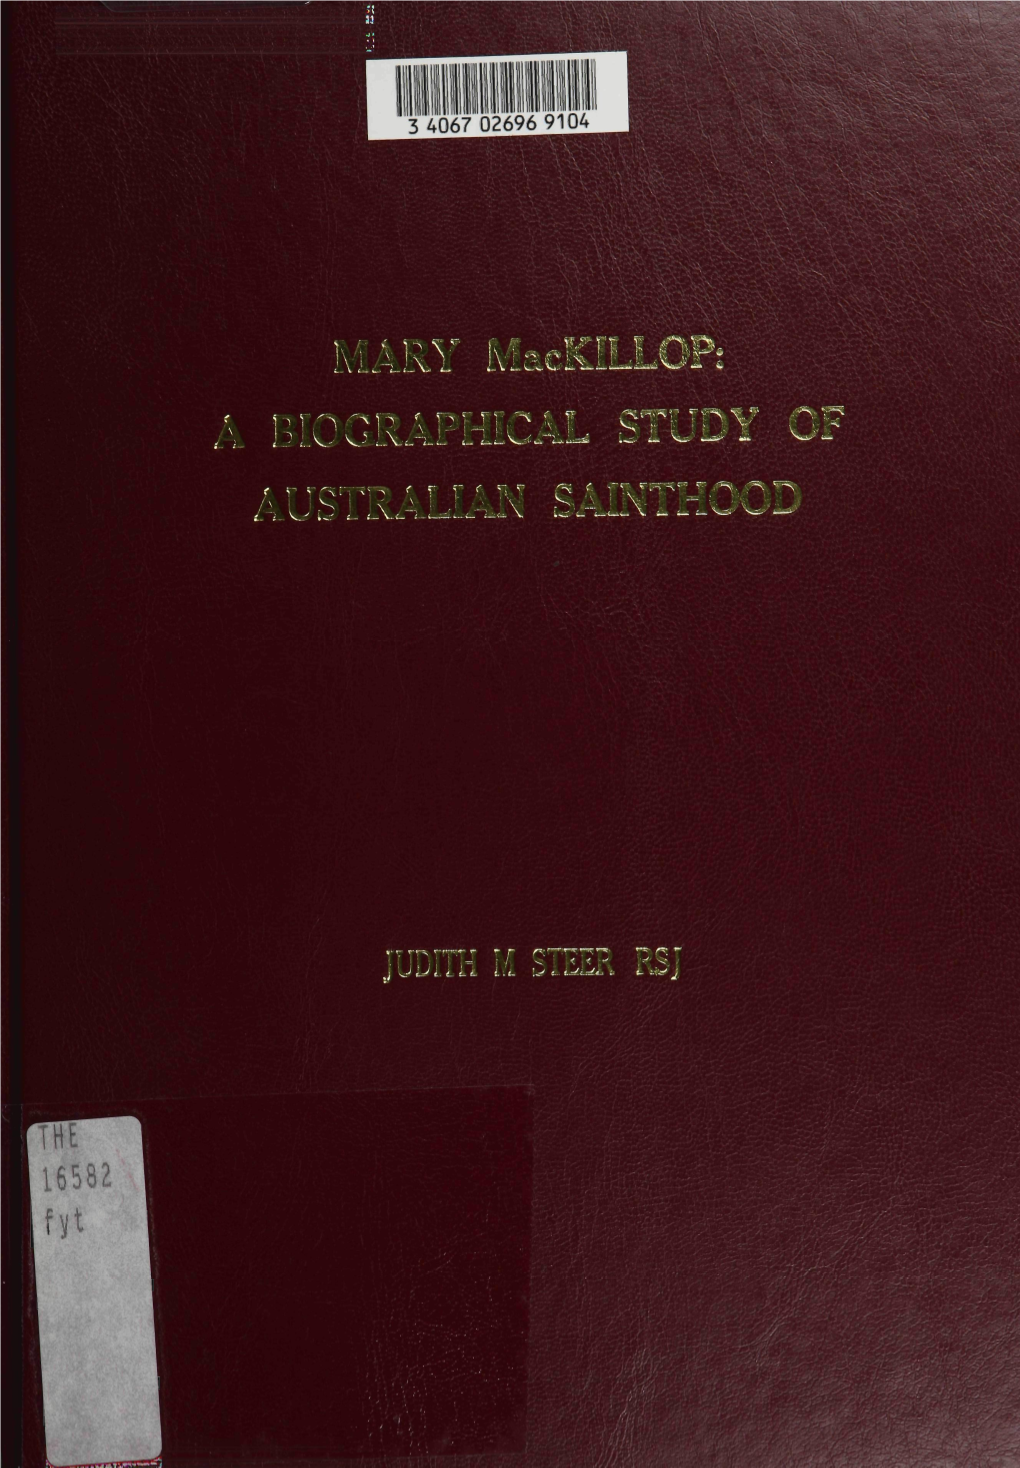 Mary Mackillop: a Biographical Study of Australian Sainthood